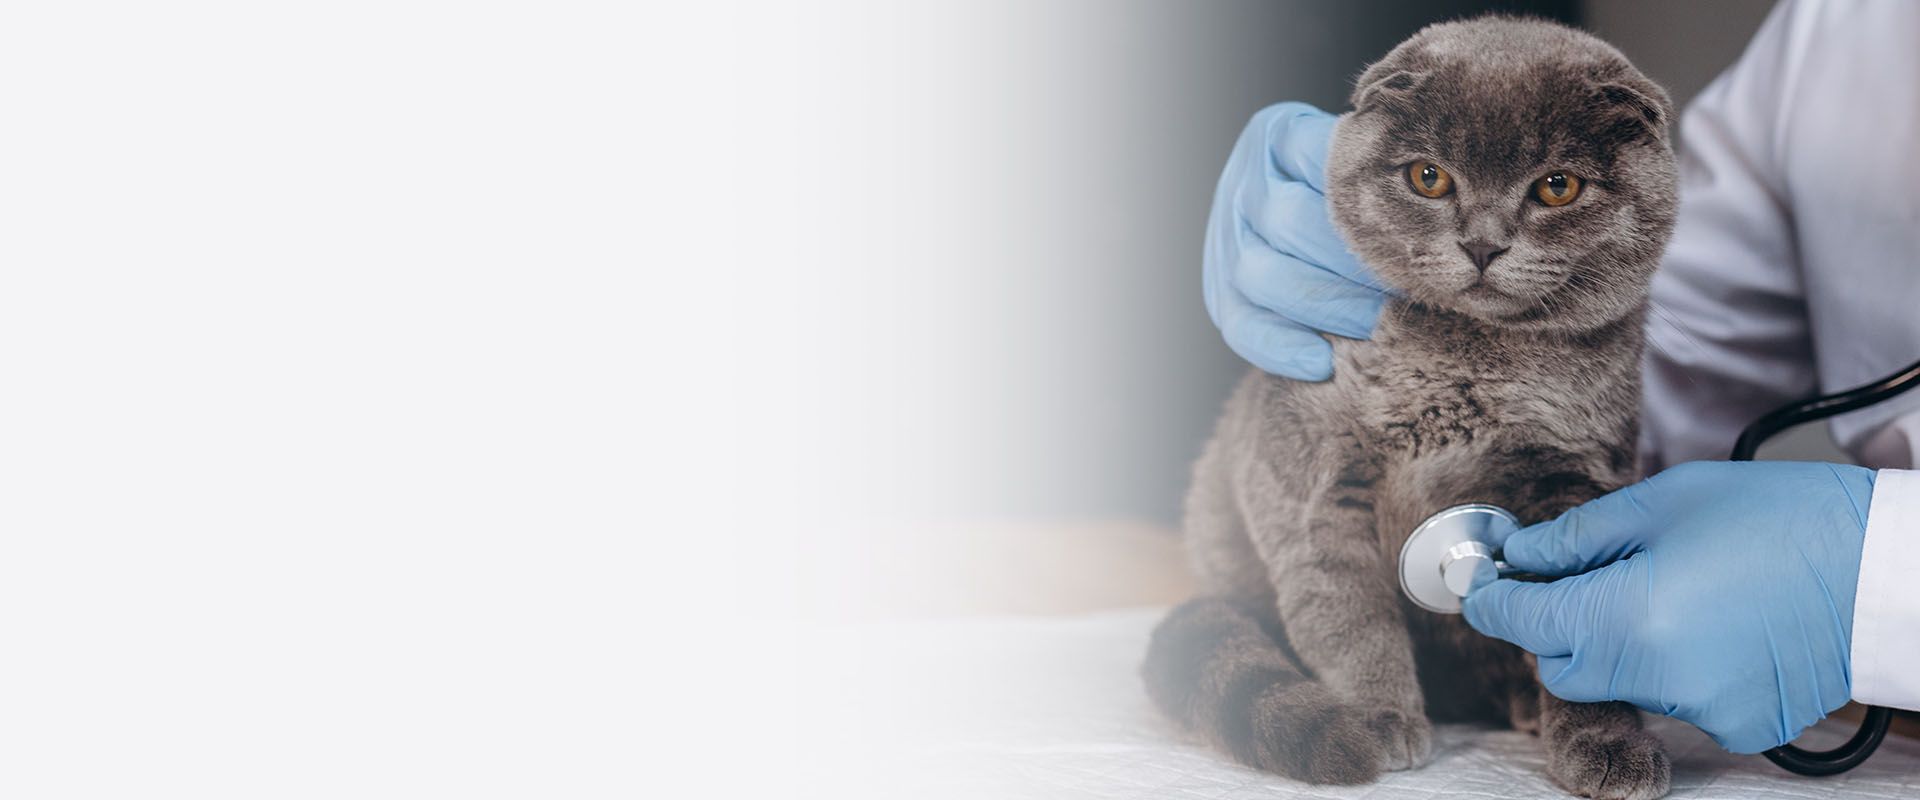 veterinarian listening cat with stethoscope